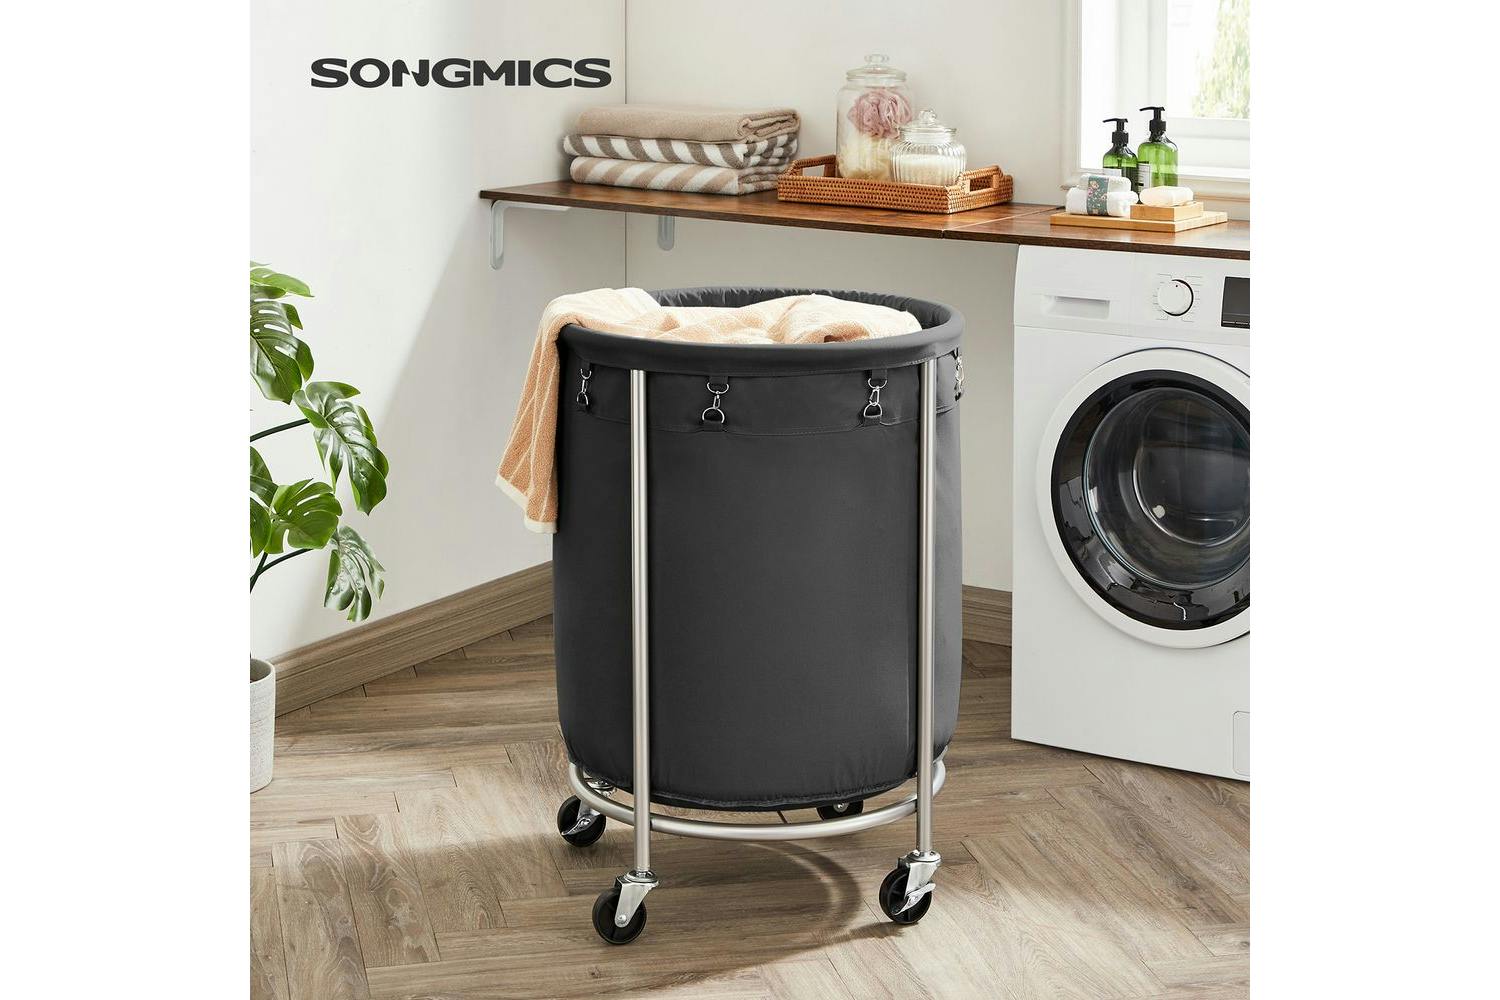 Songmics RLS001B01 Laundry Basket With Wheels